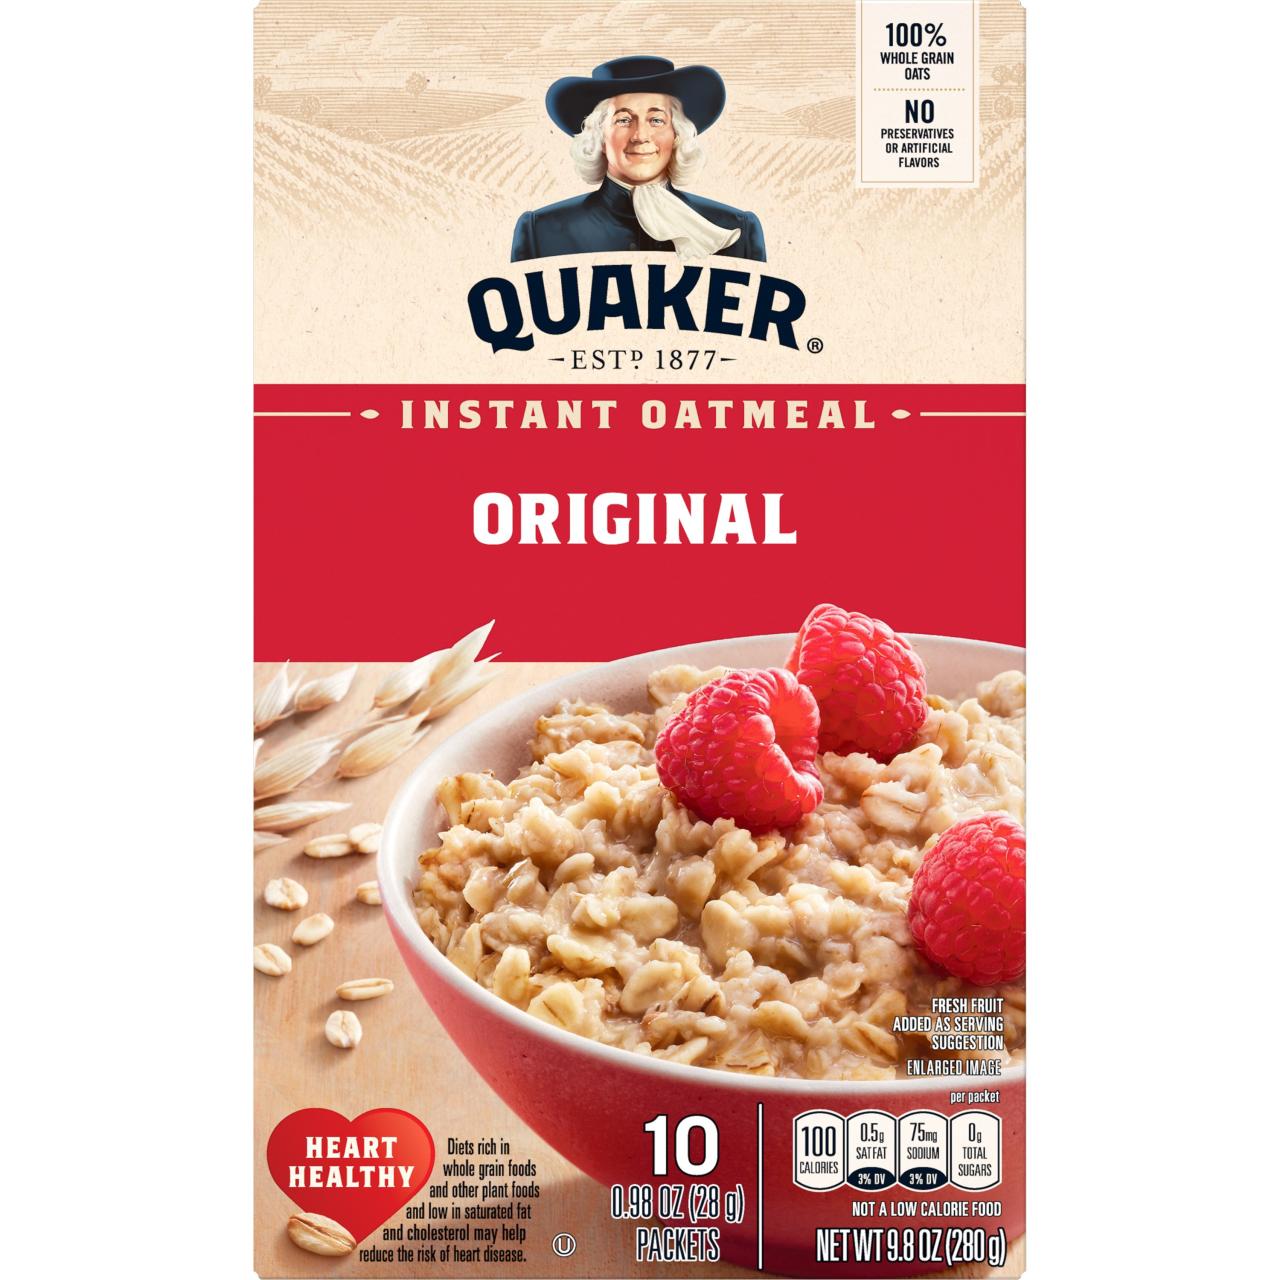 Quaker oatmeal strikes foodbabe